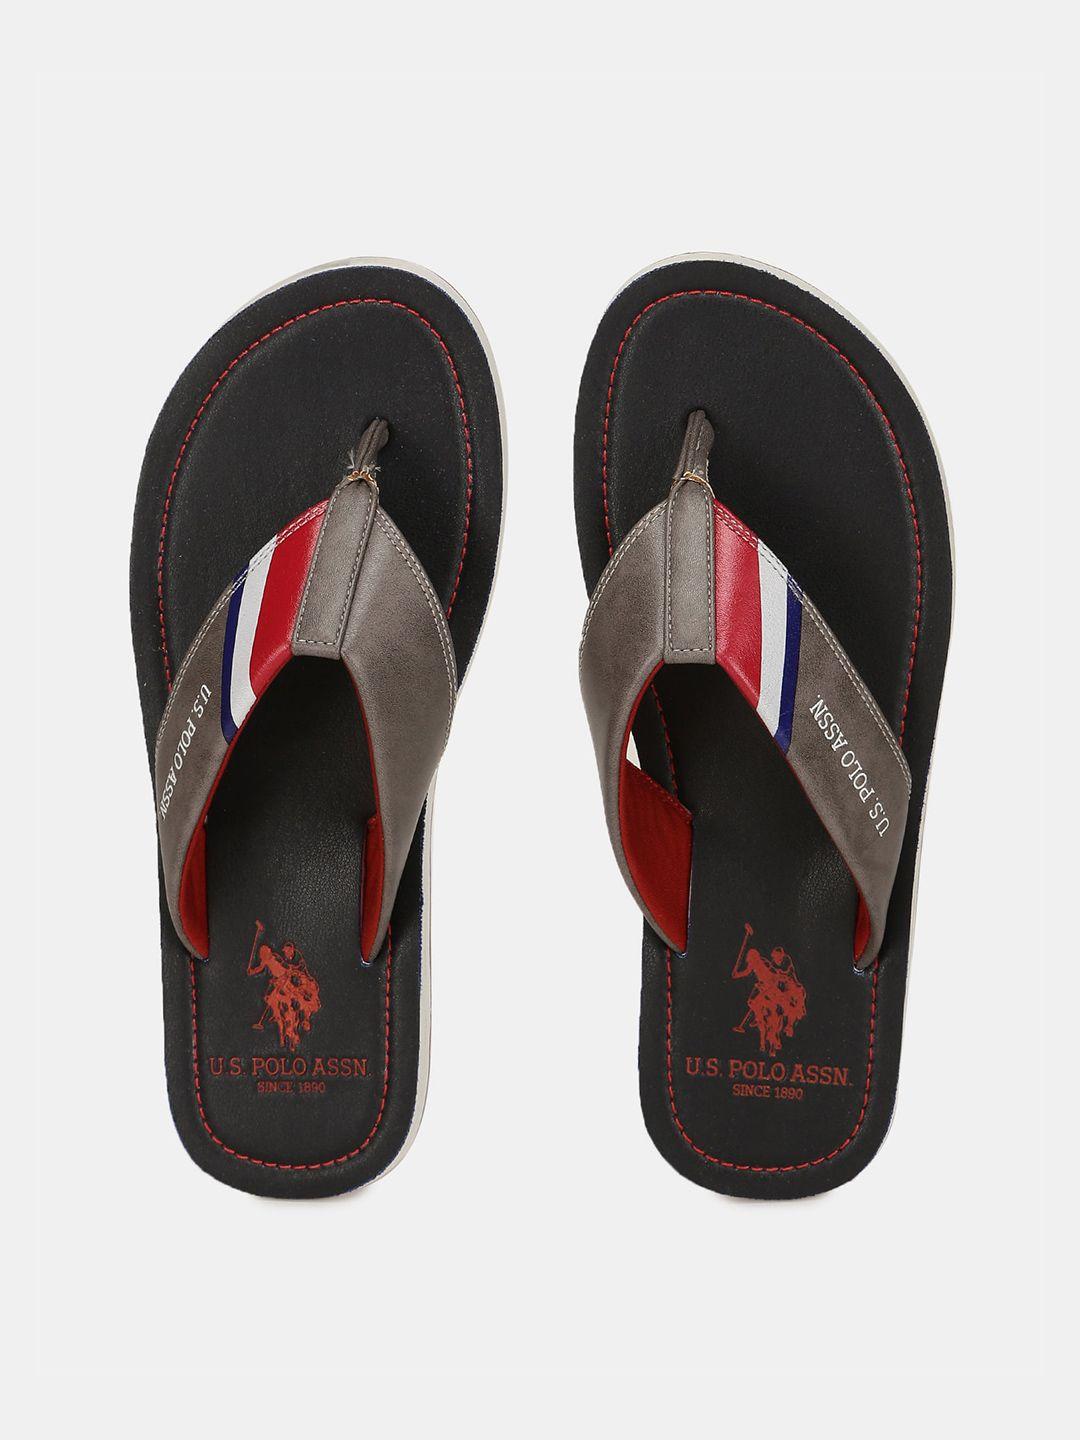 u s polo assn men black & red comfort sandals